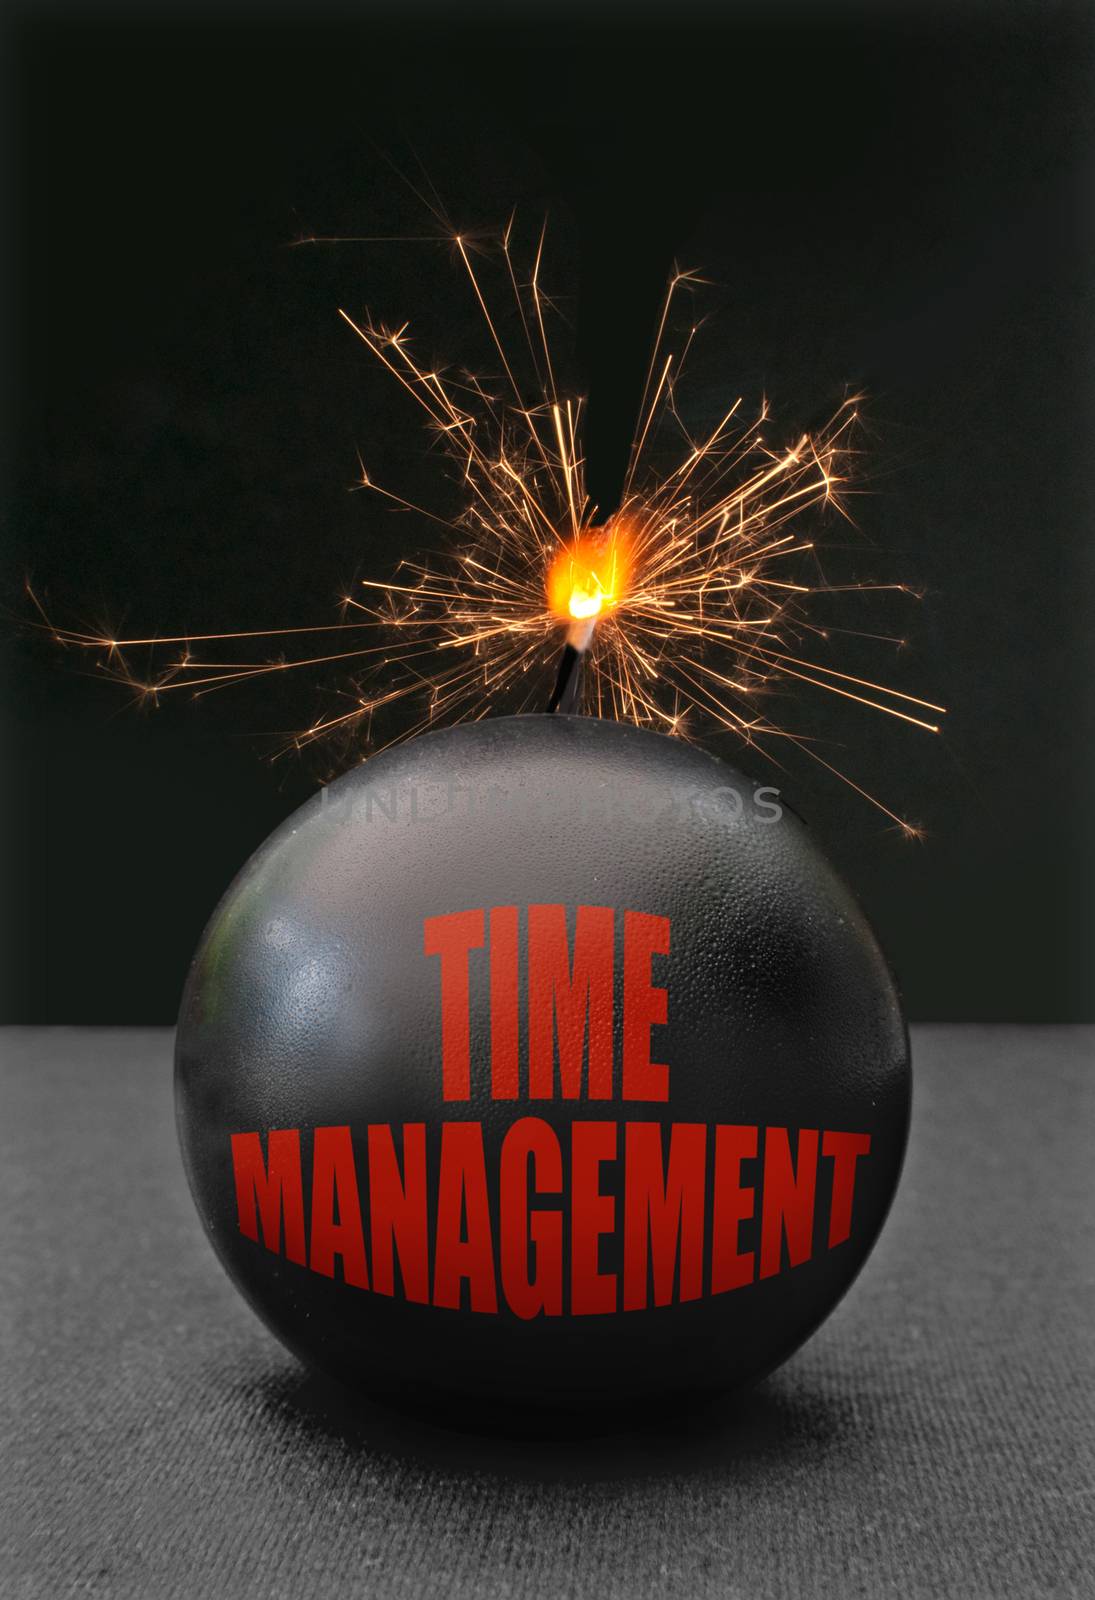 Time management  by unikpix